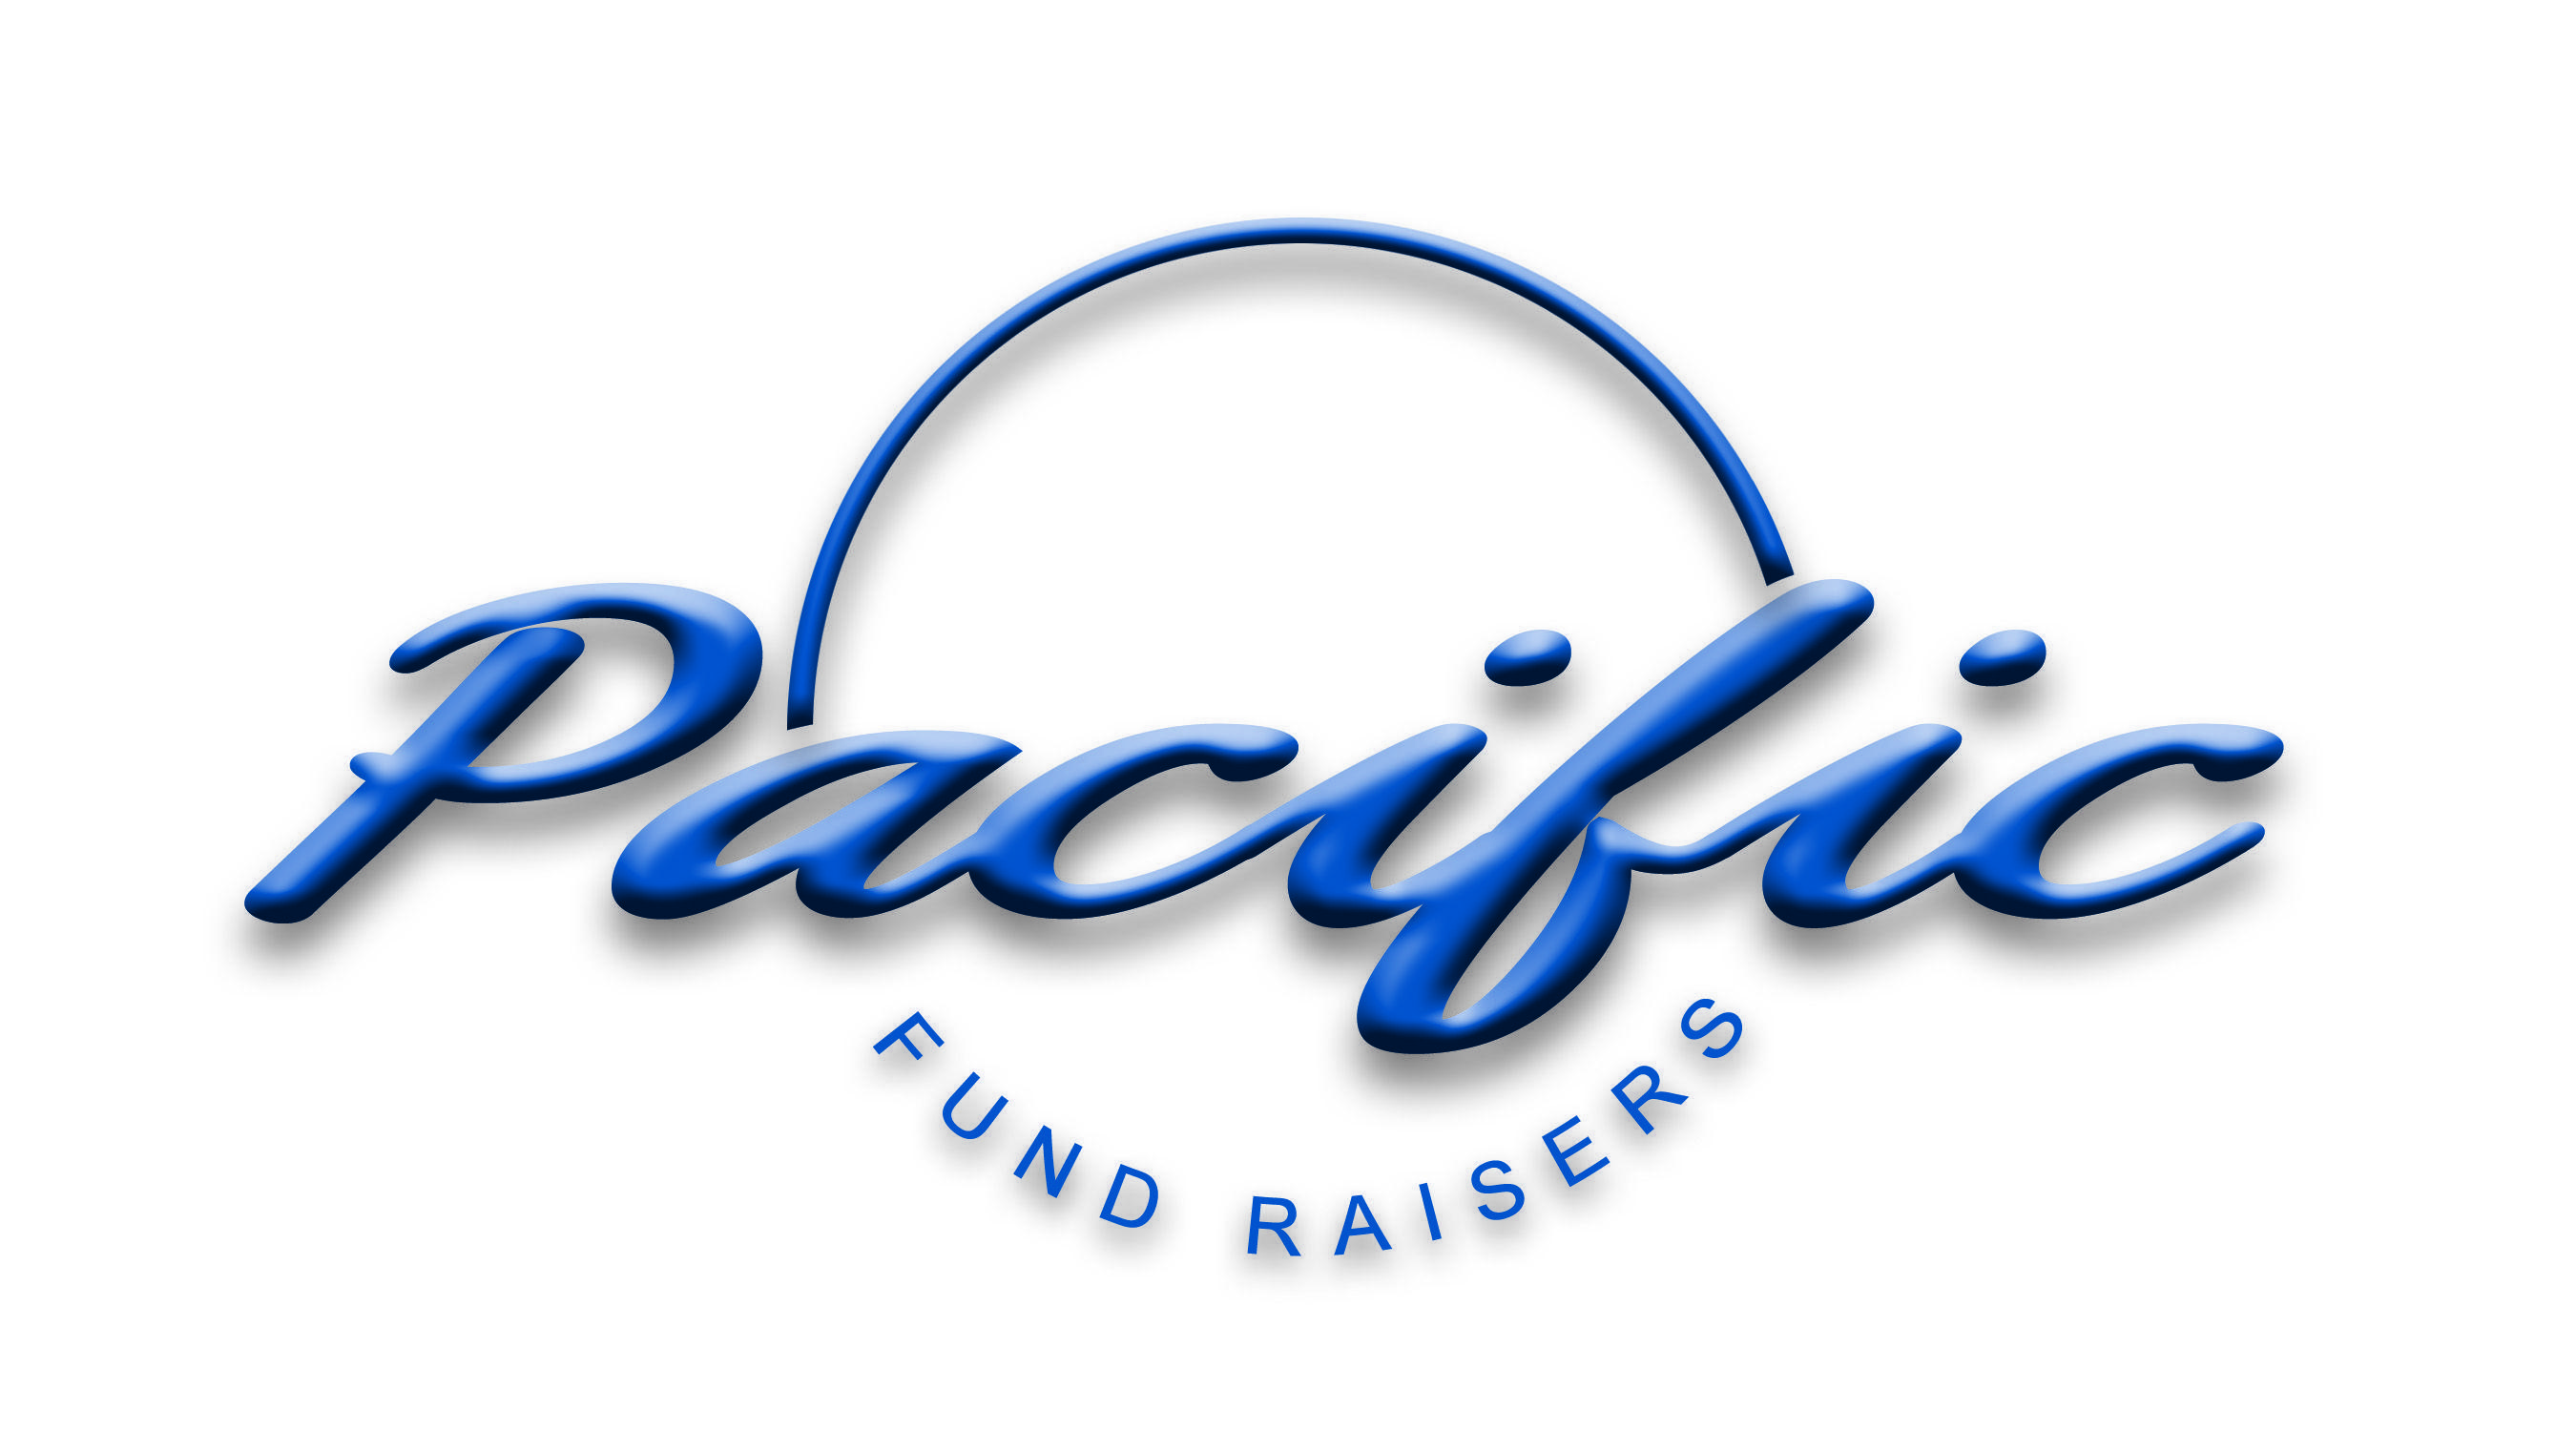 Pacific Logo - Pacific Logo. Free Image clip art online